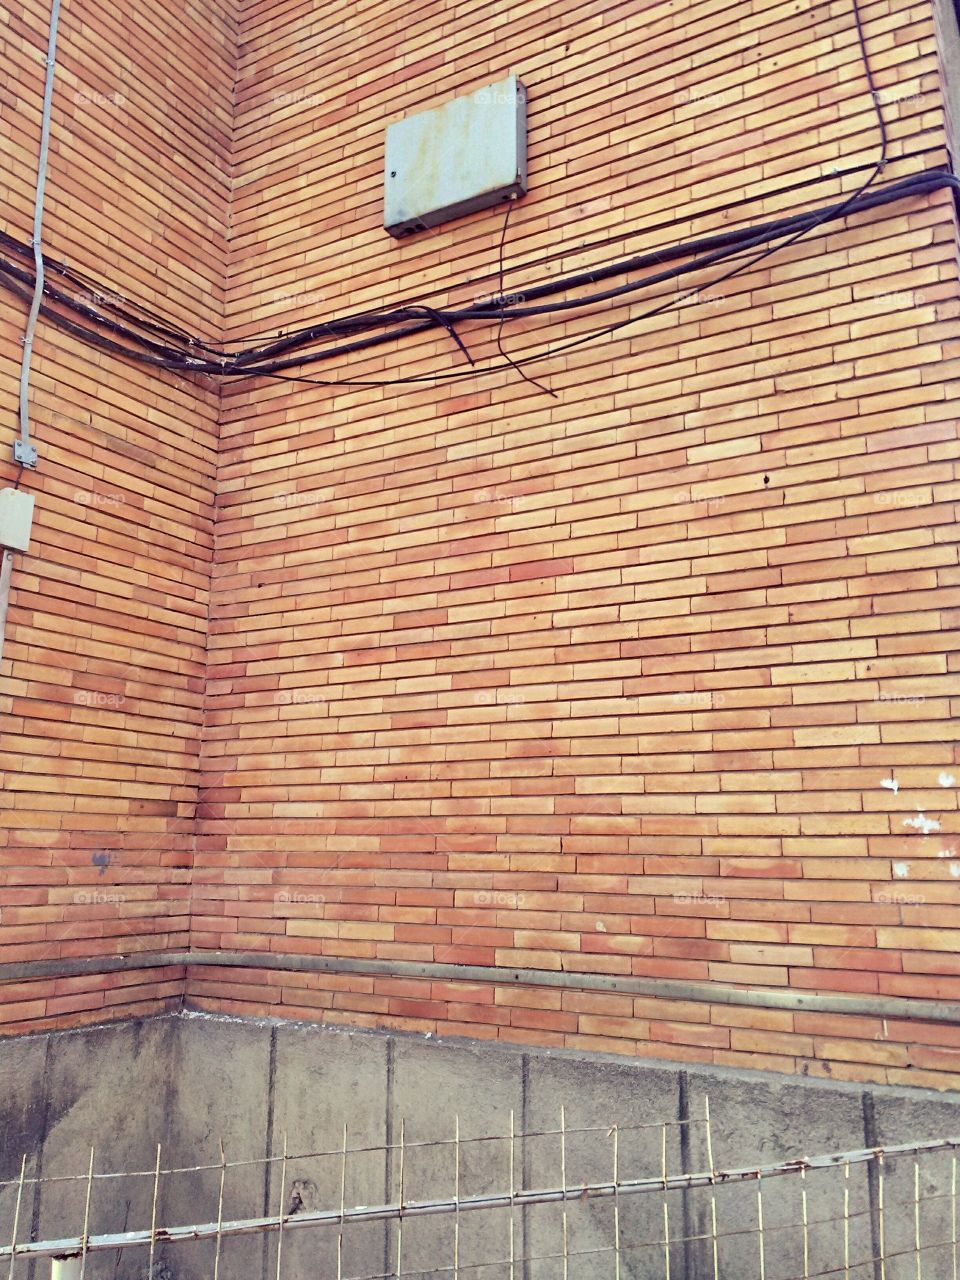 Brick wall close-up building